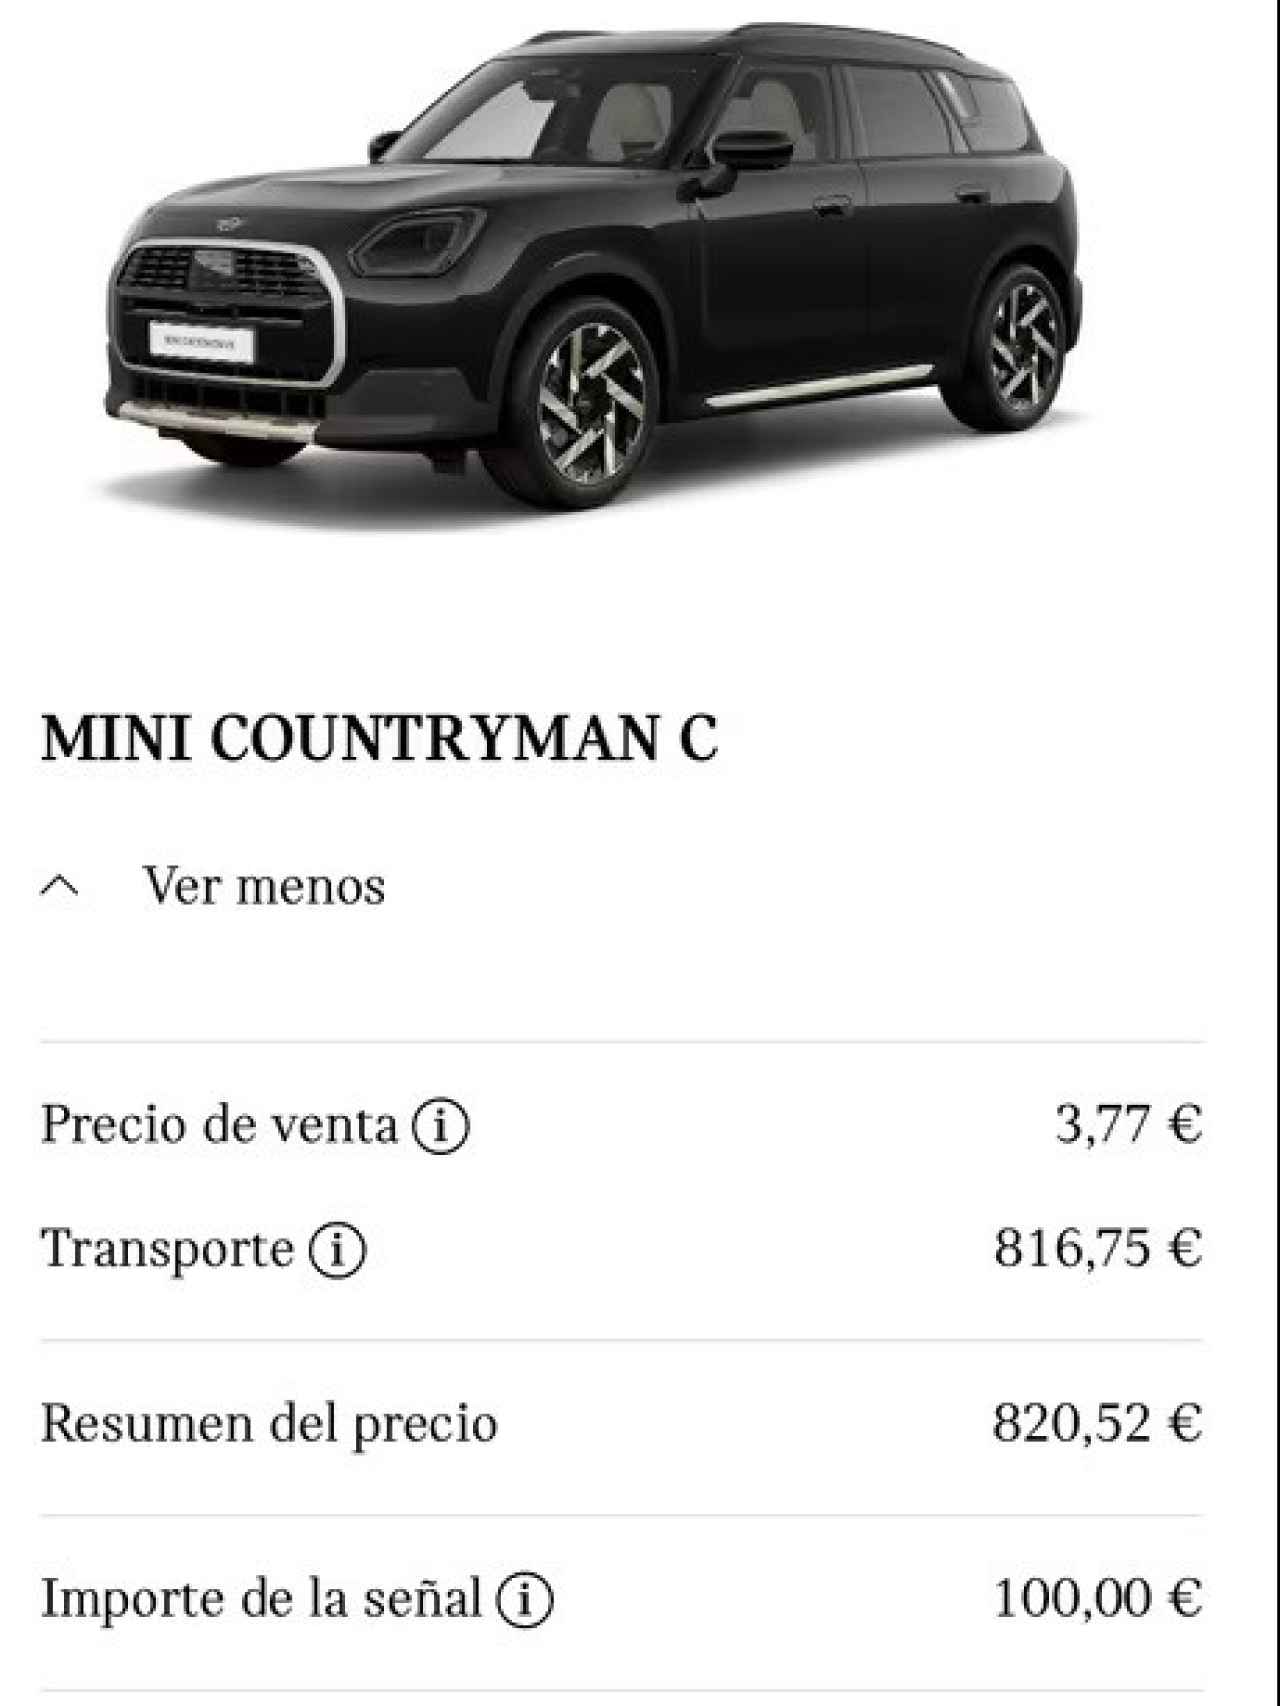 Oferta de un Mini a cuatro euros